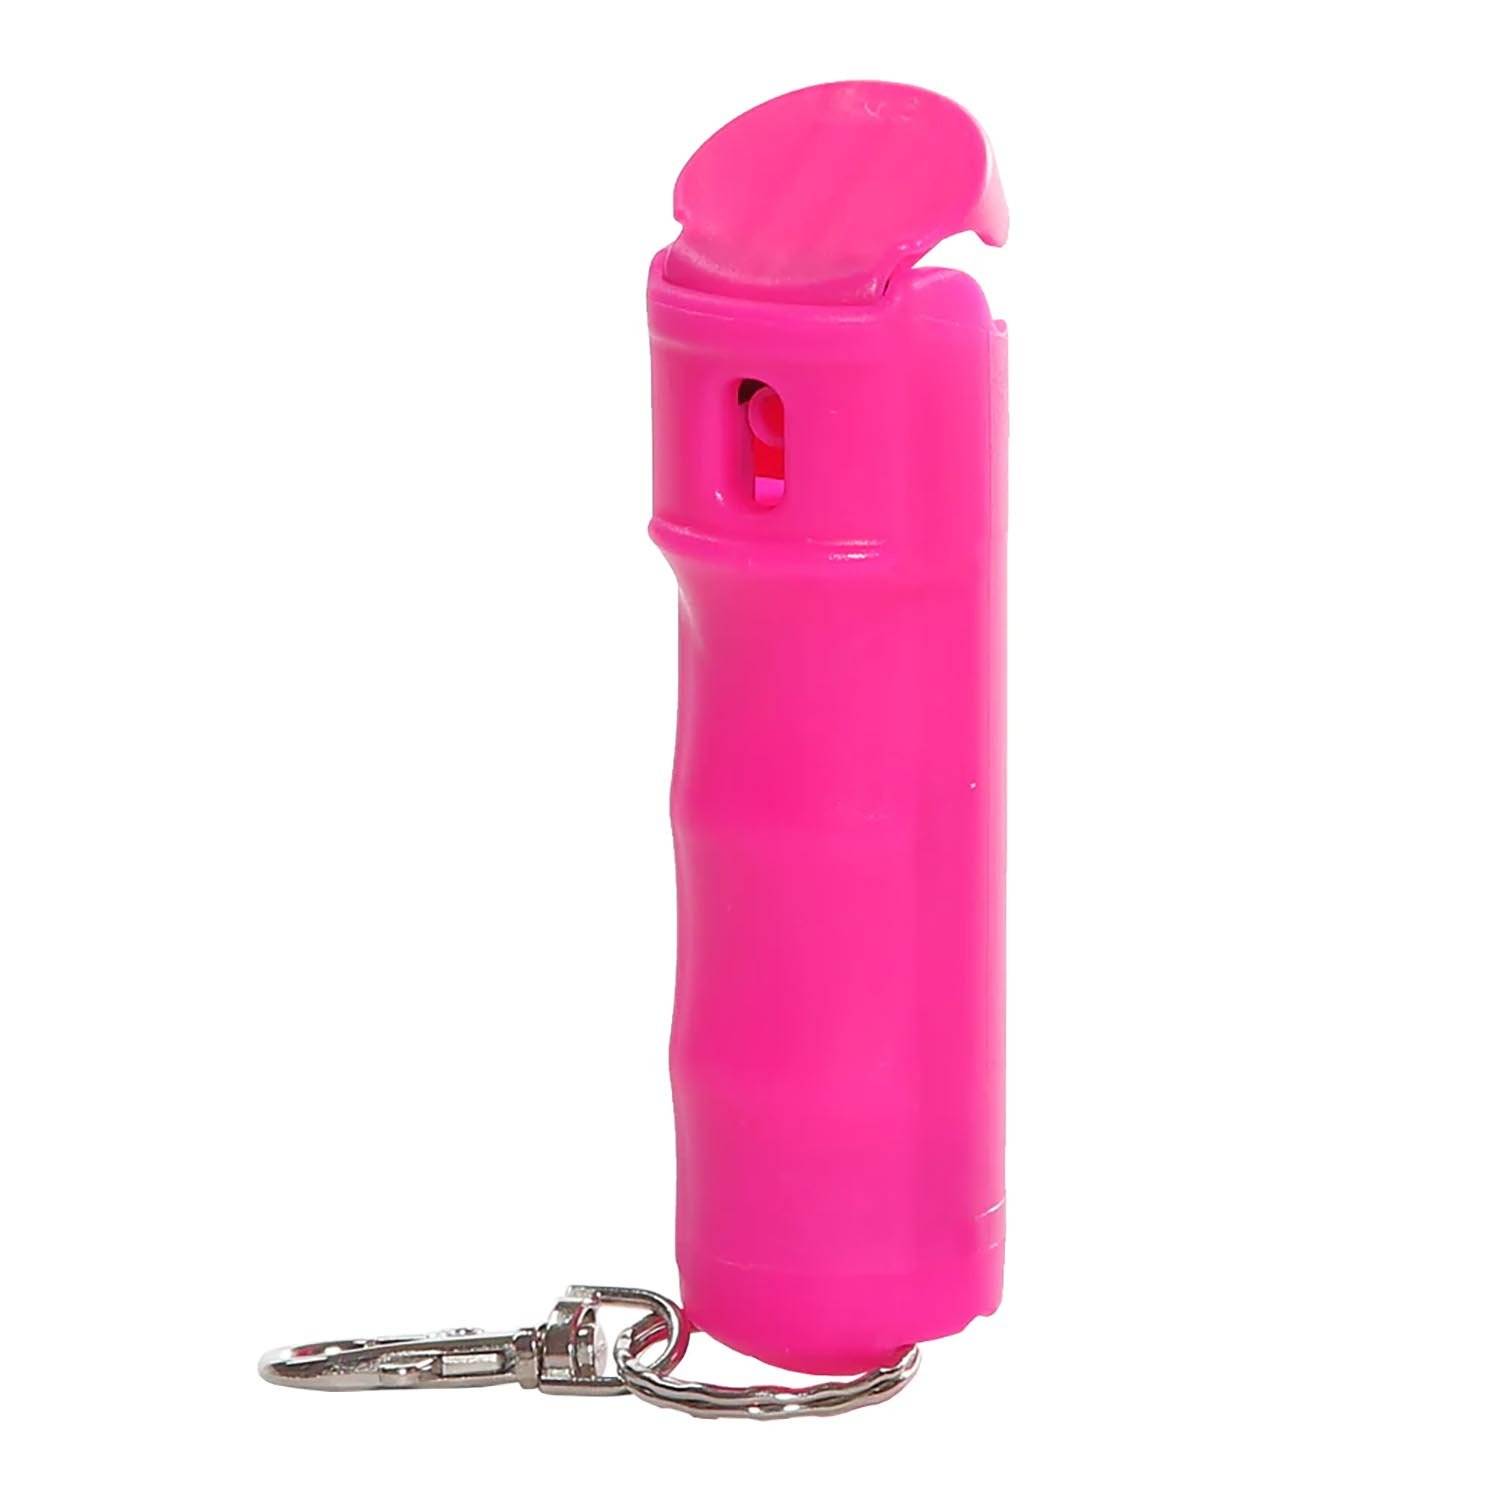 Mace Key Guard Hard Case Pepper Spray